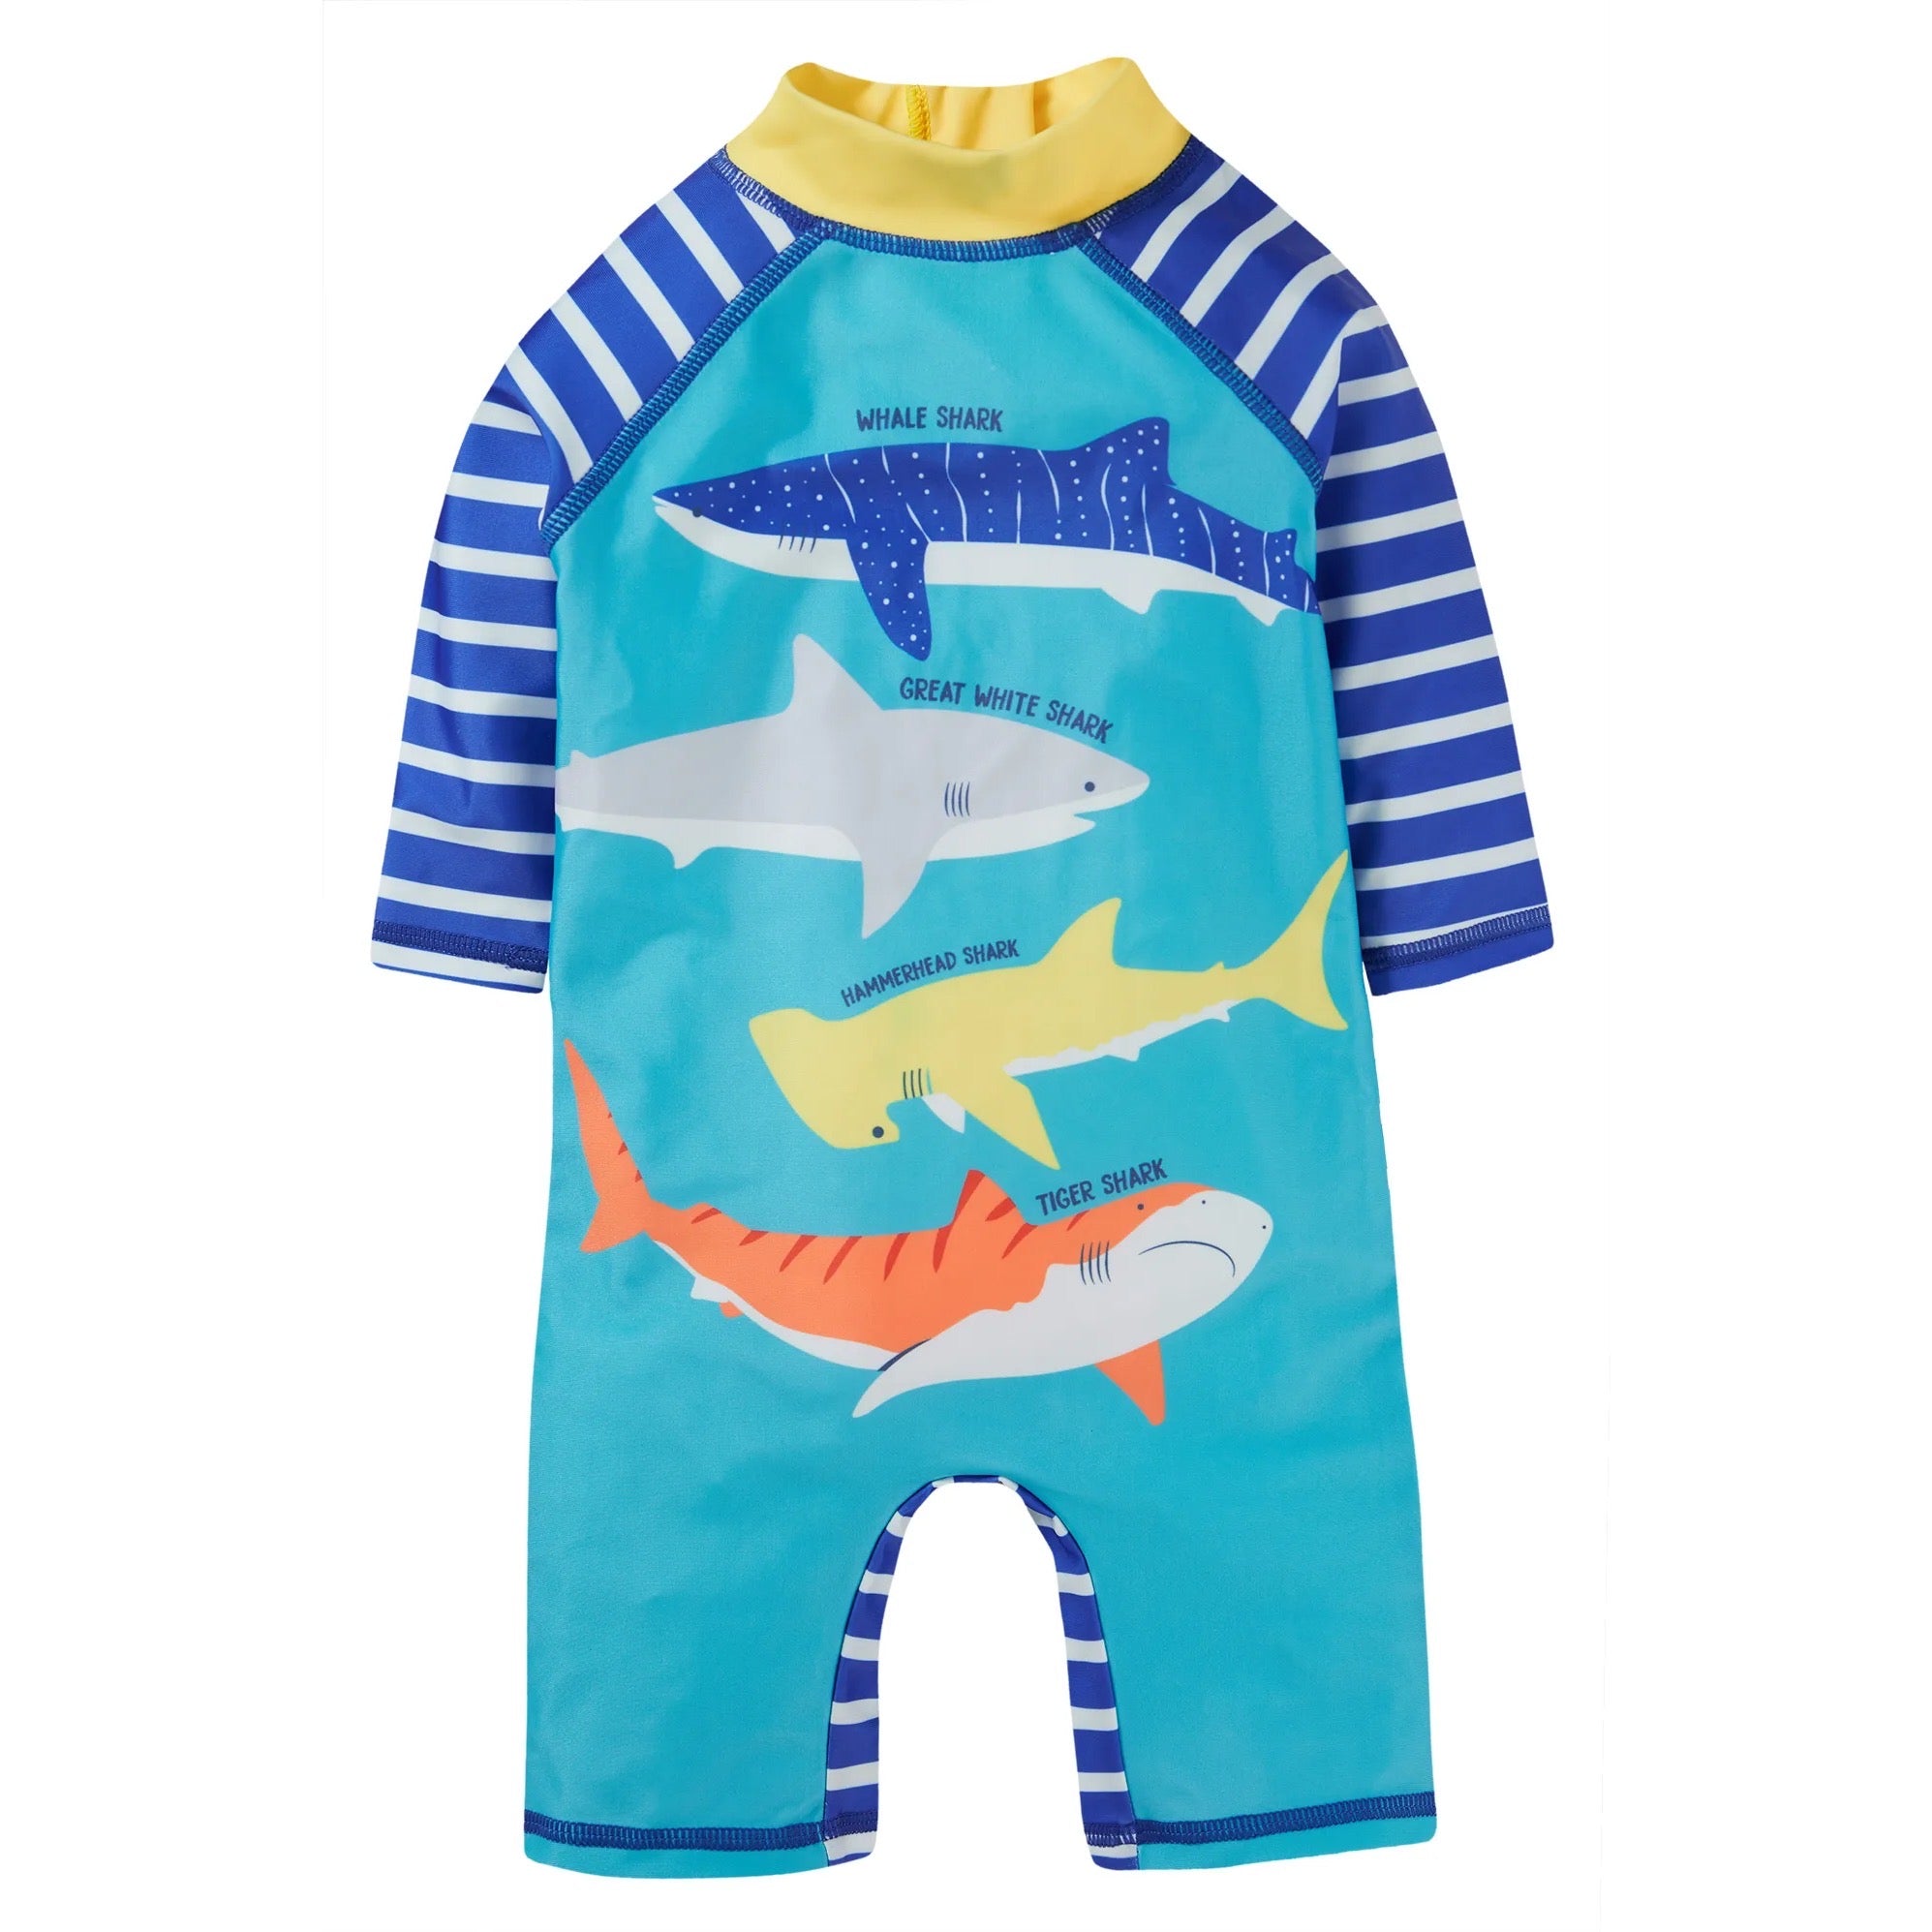 Frugi Sunsafe Suit Lm5bi Tropical Sea Shark Clothing 0-6M / Blue,6-12M / Blue,12-18M / Blue,18-24M / Blue,2-3YRS / Blue,3-4YRS / Blue